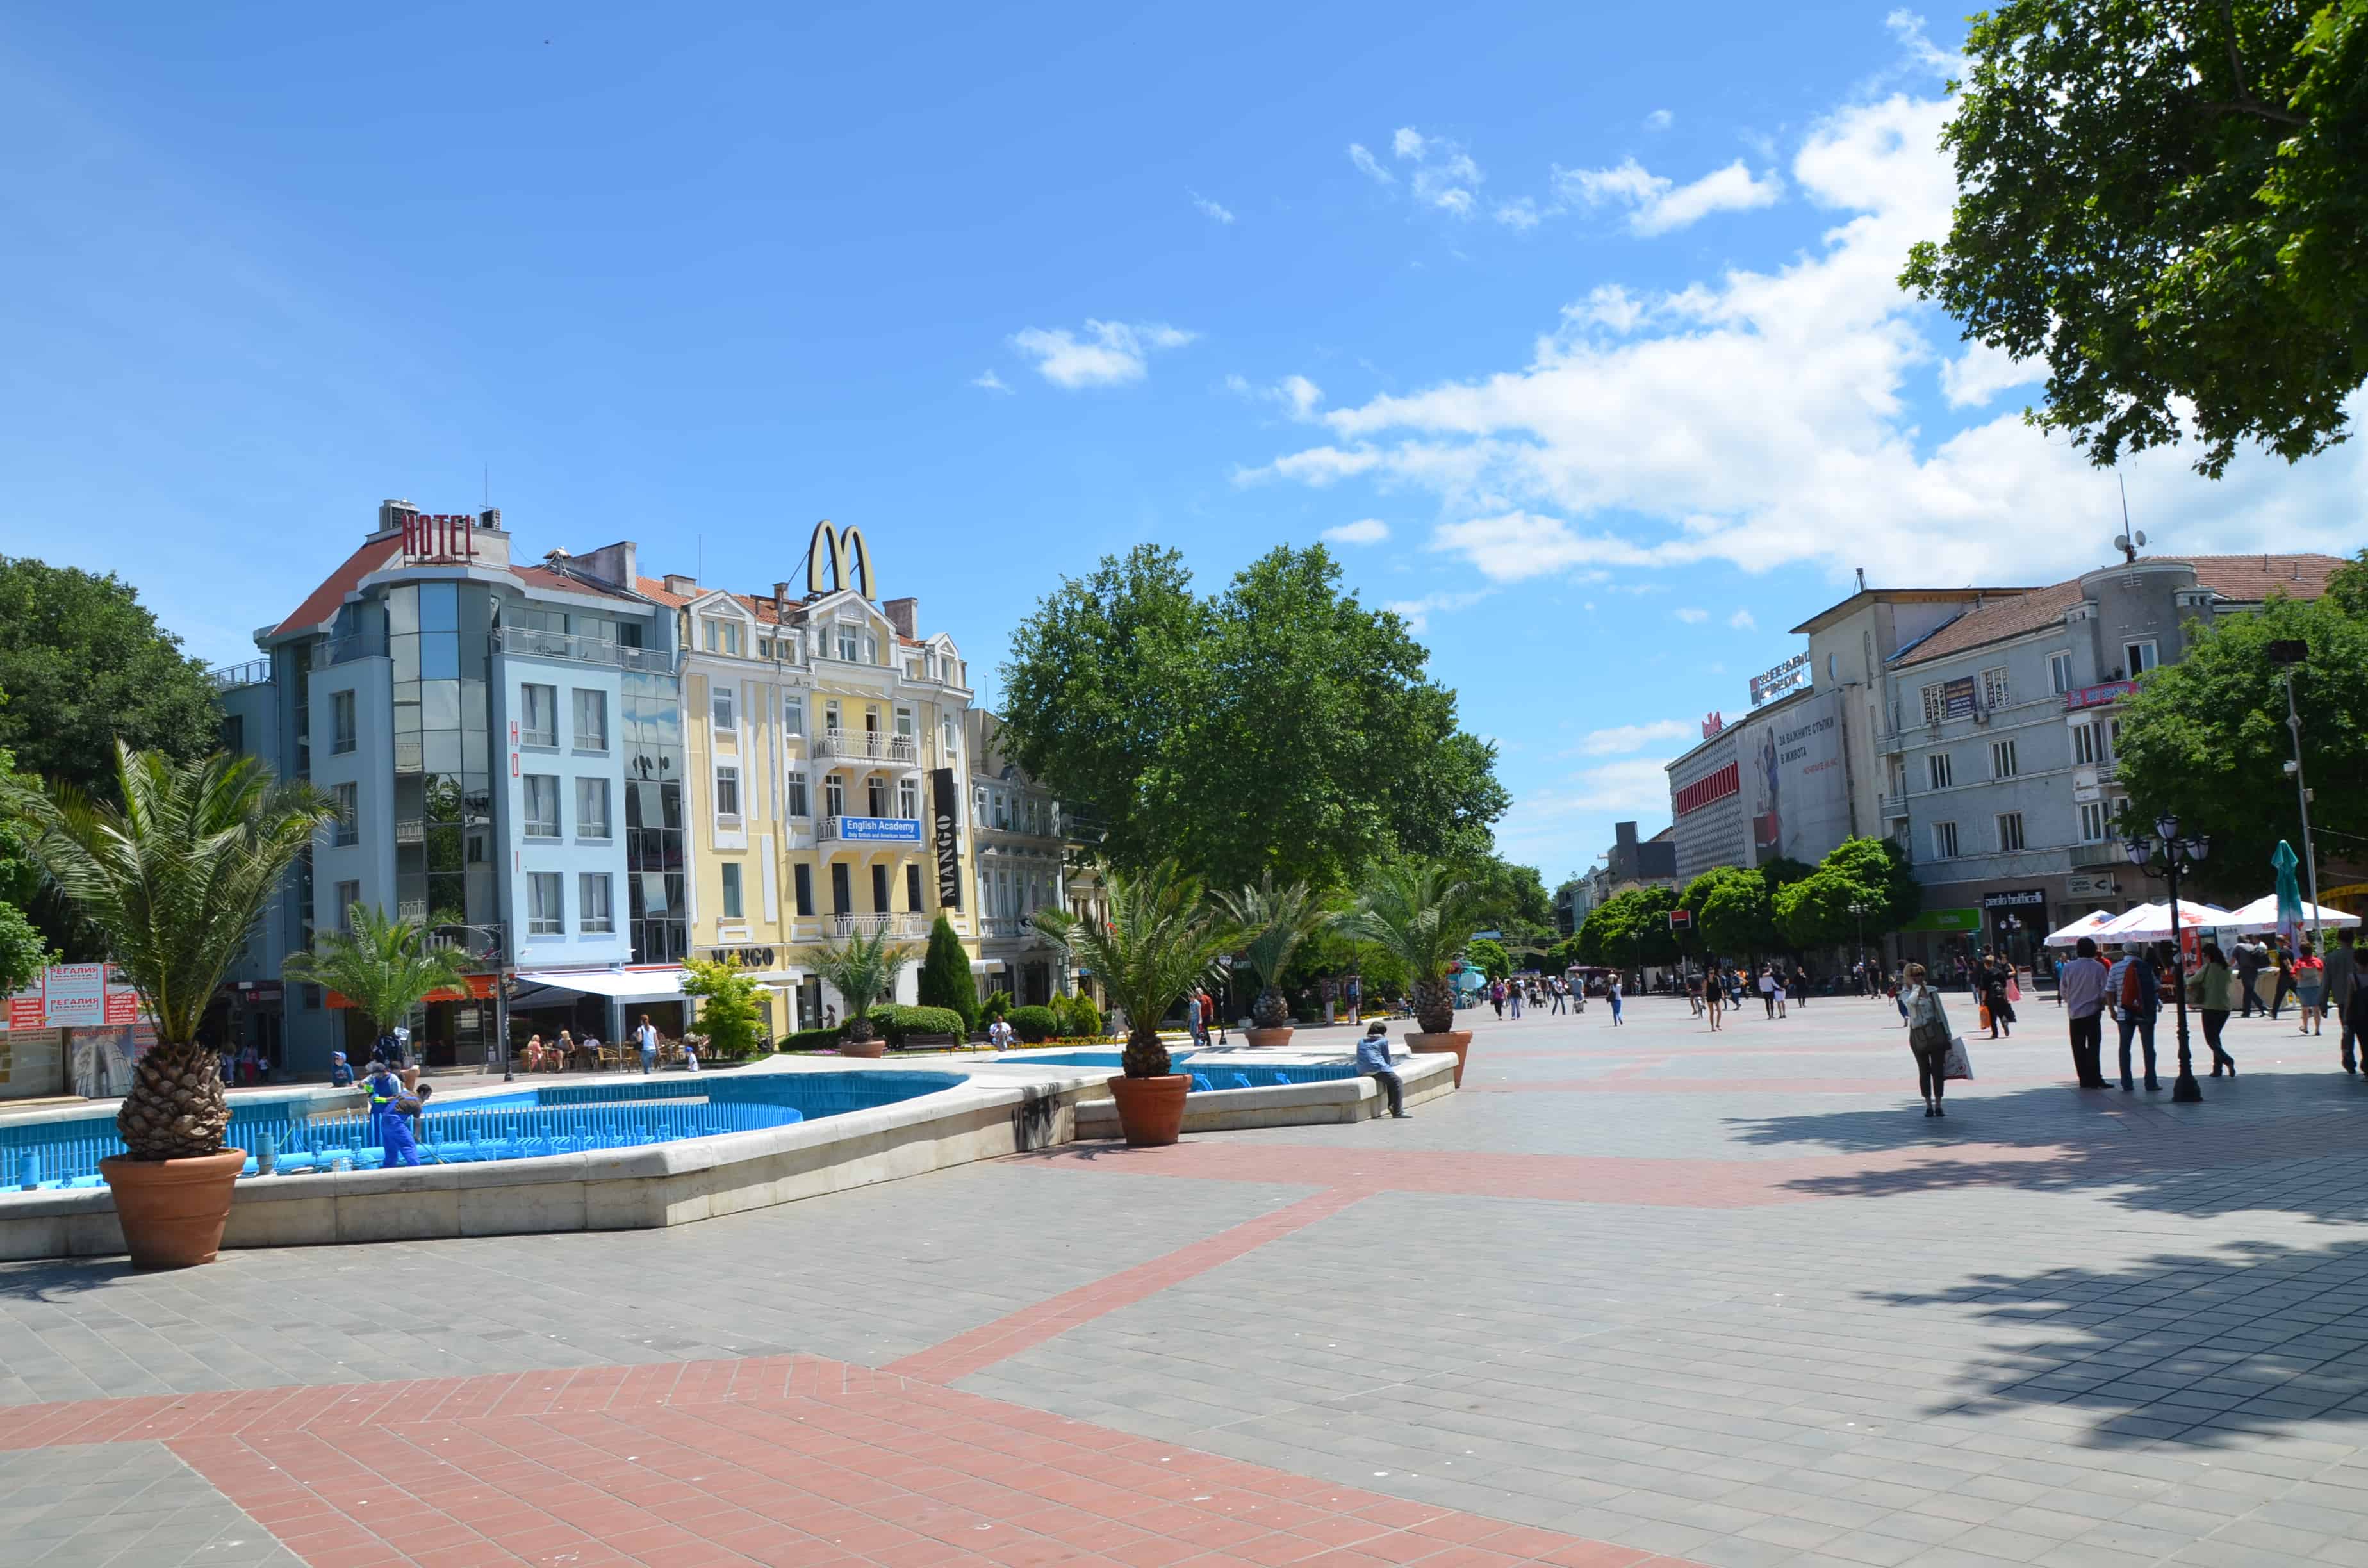 Ploshtad Nezavizimost in Varna, Bulgaria